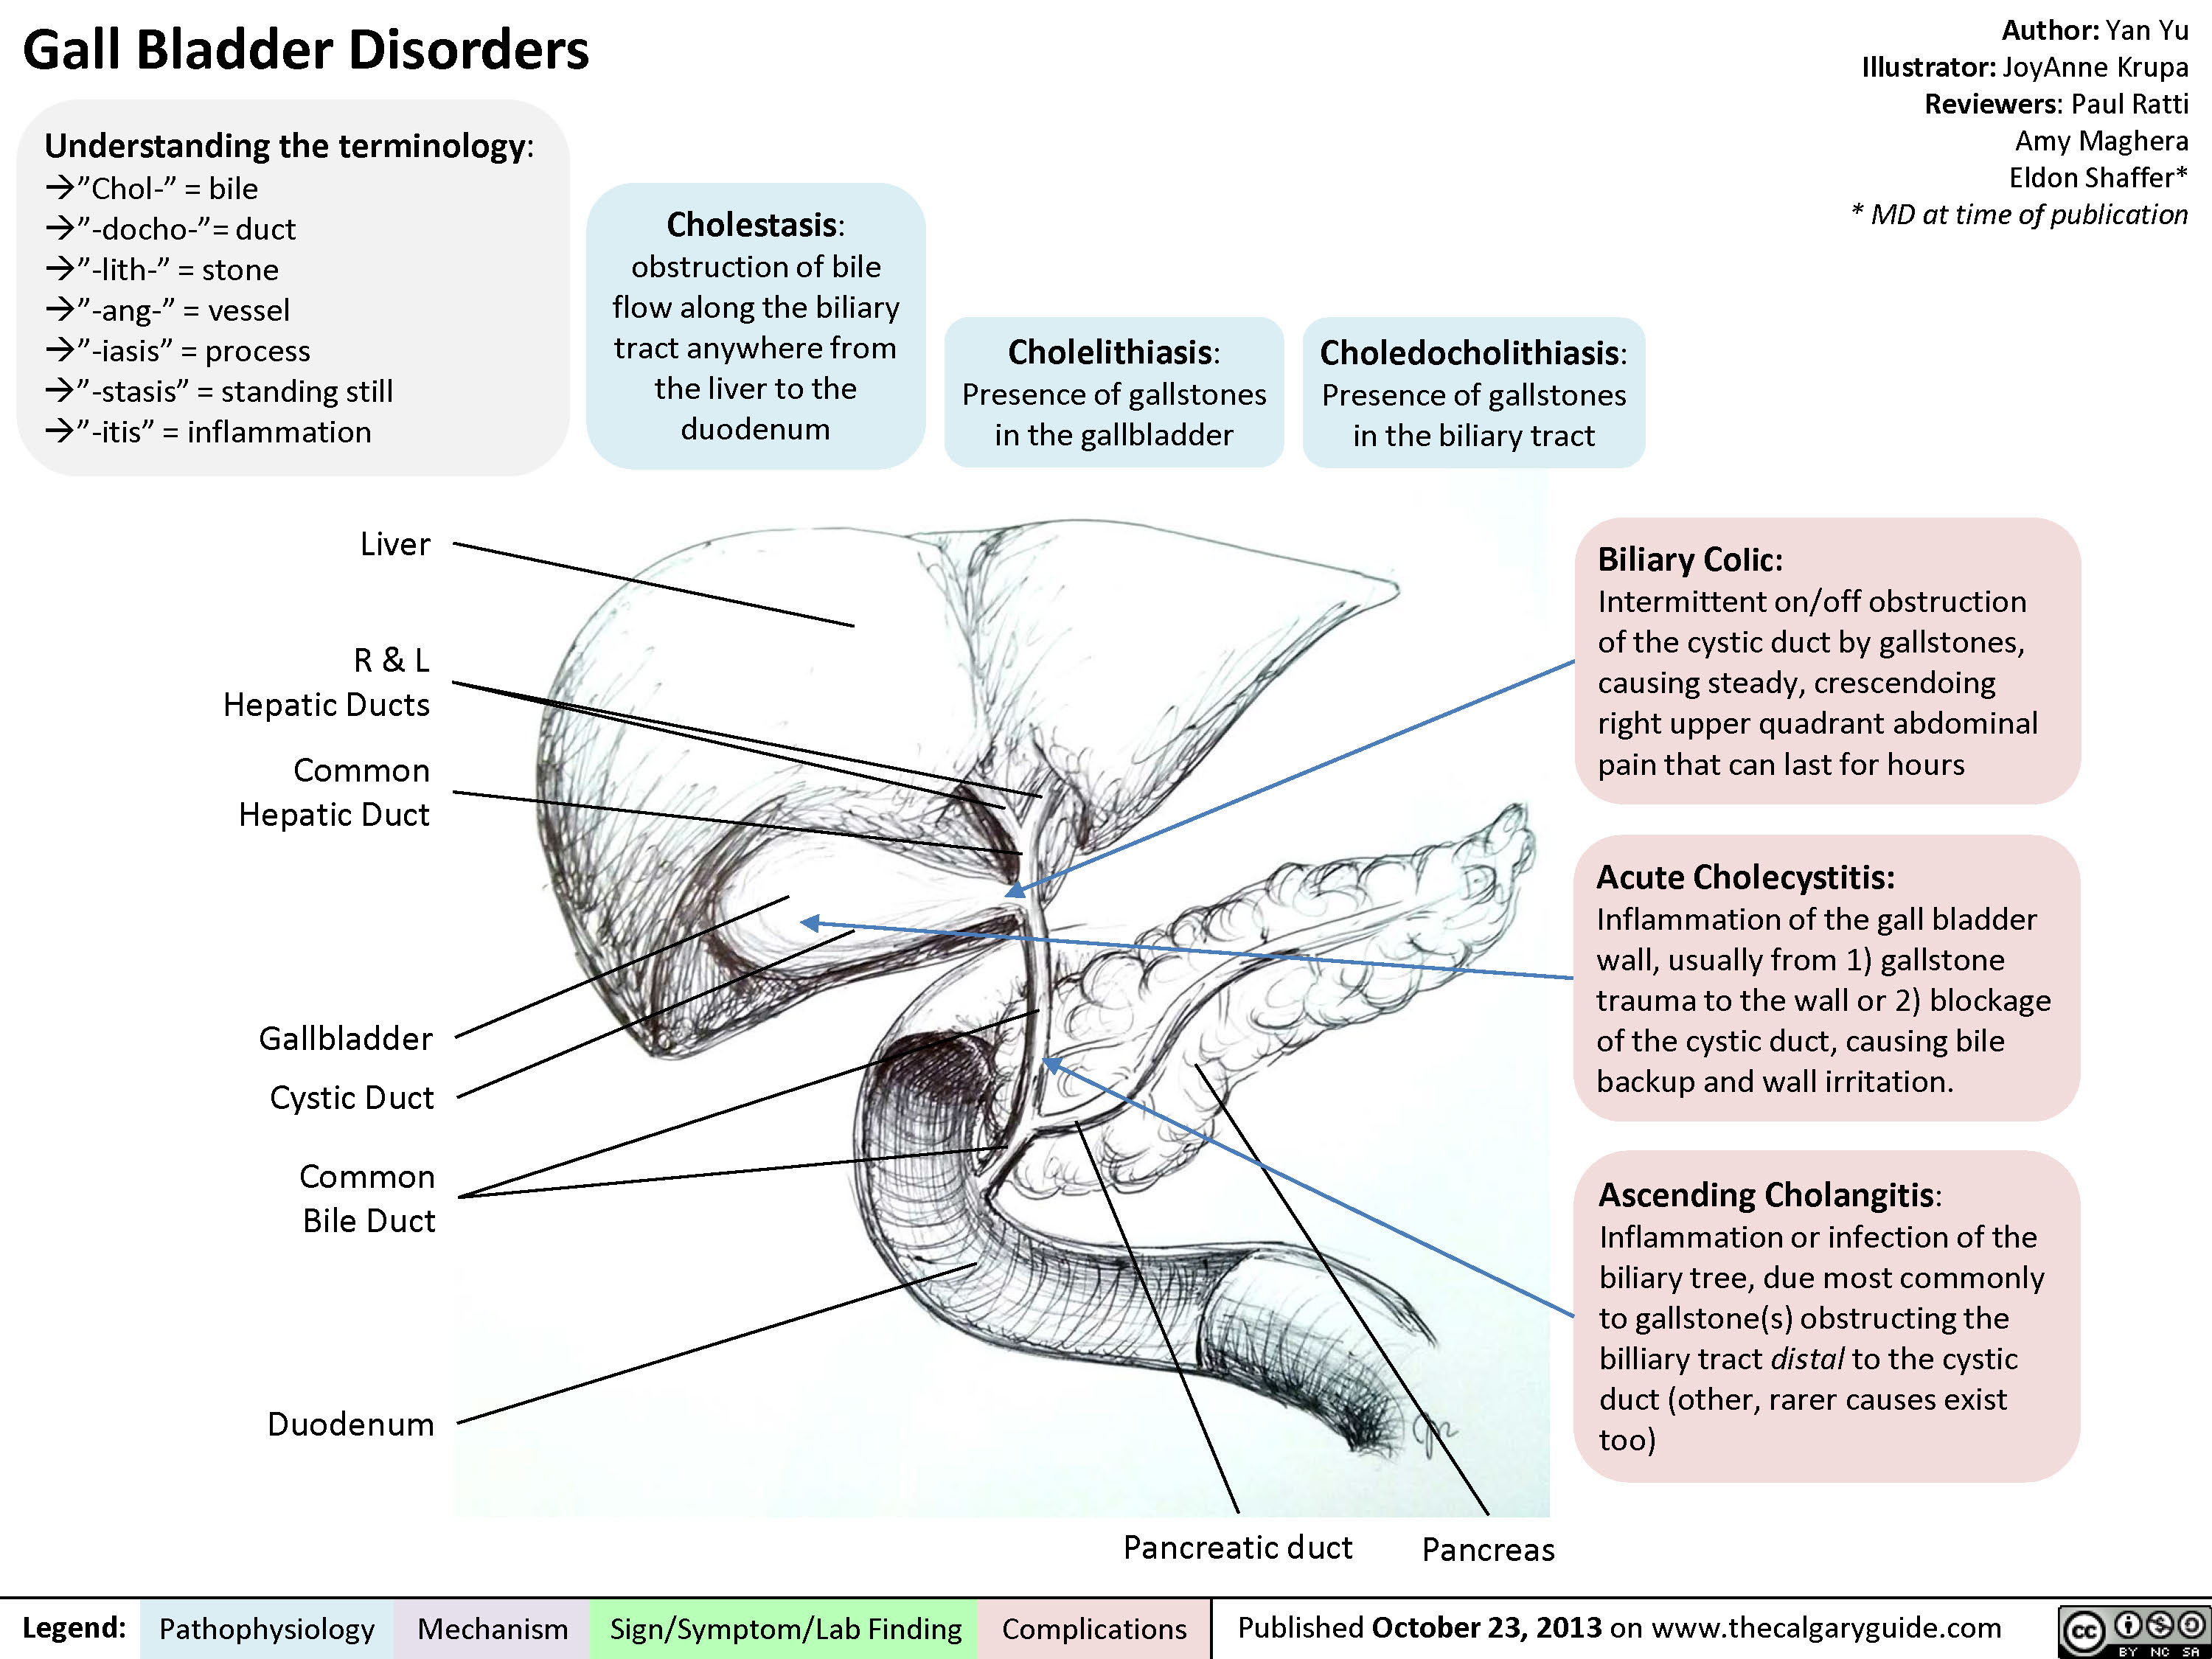 Gall Bladder Disorders